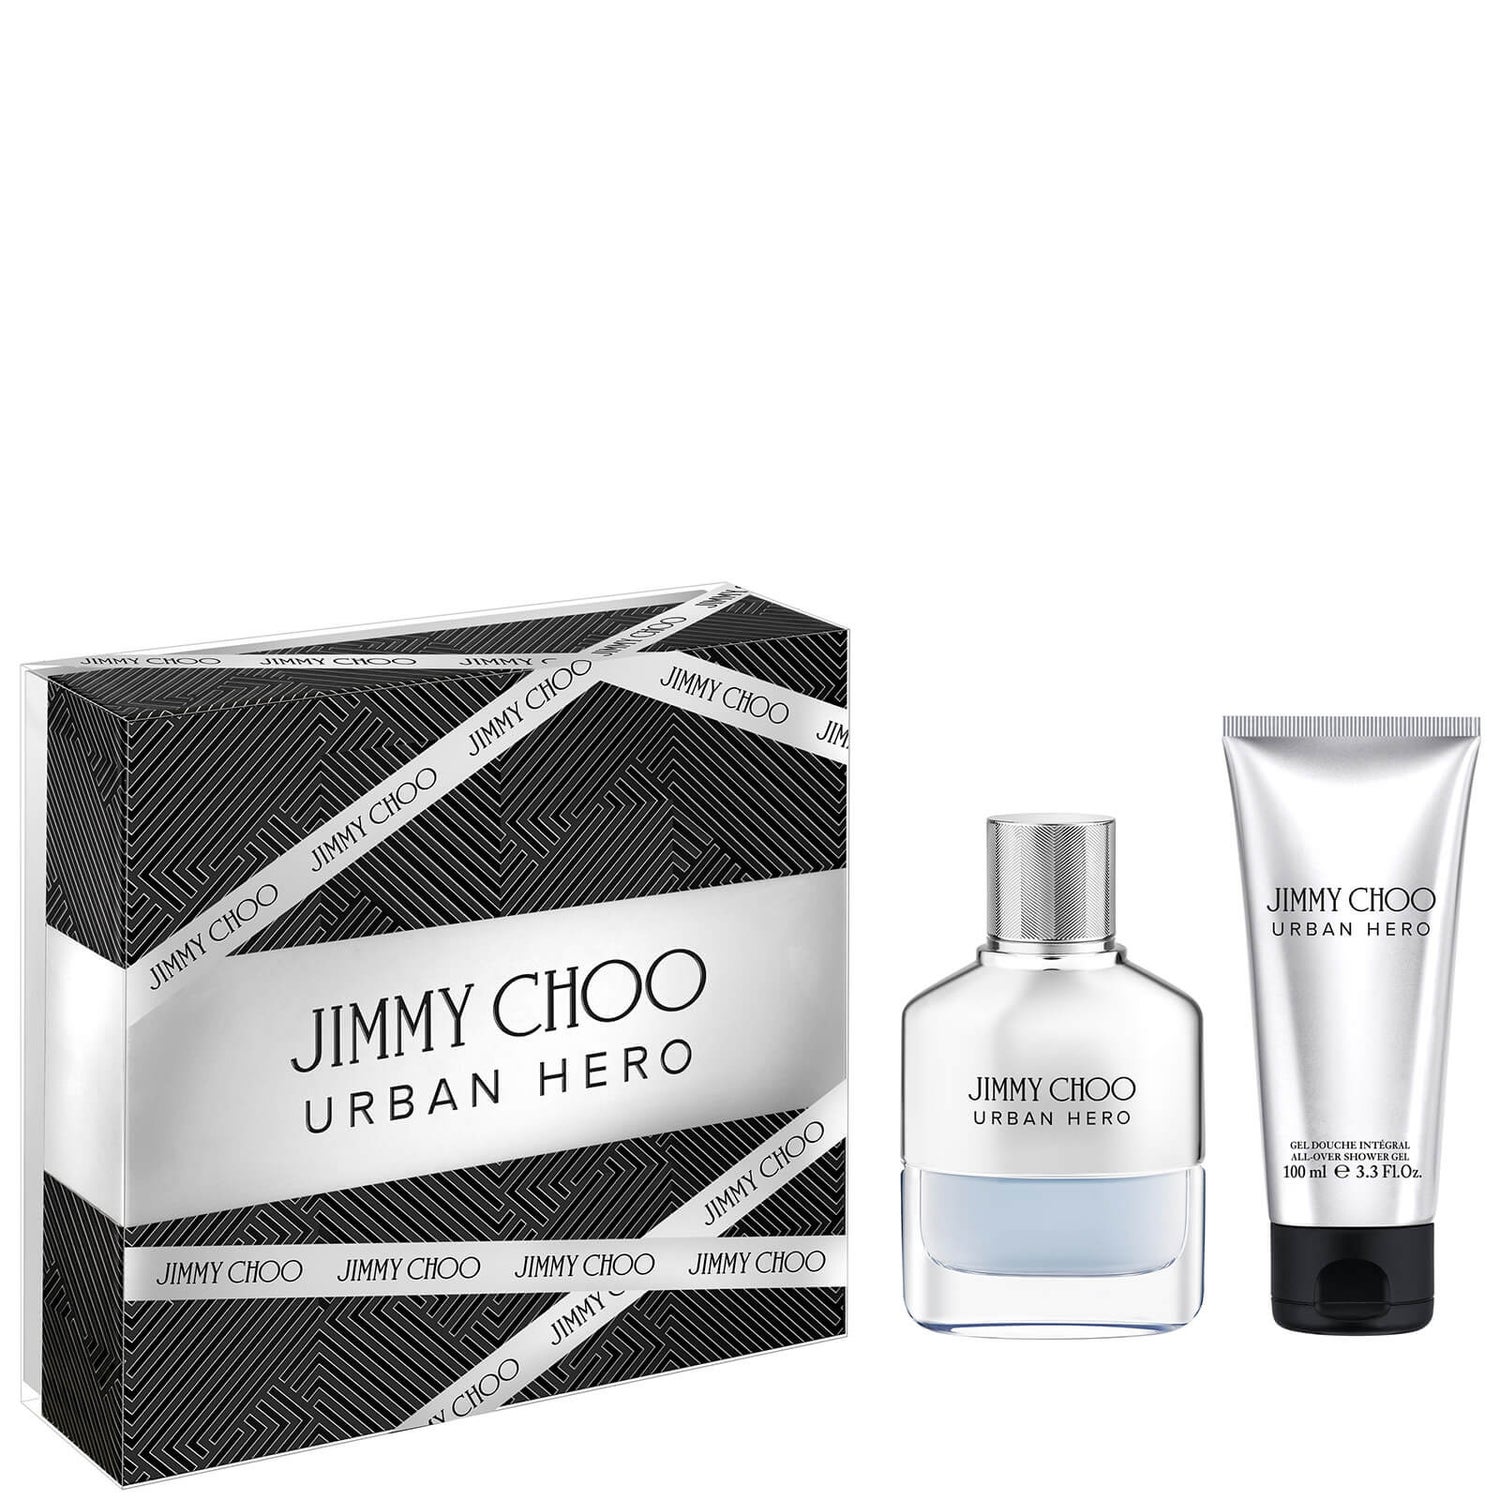 Jimmy Choo Urban Hero Eau de Parfum and Shower Gel Set